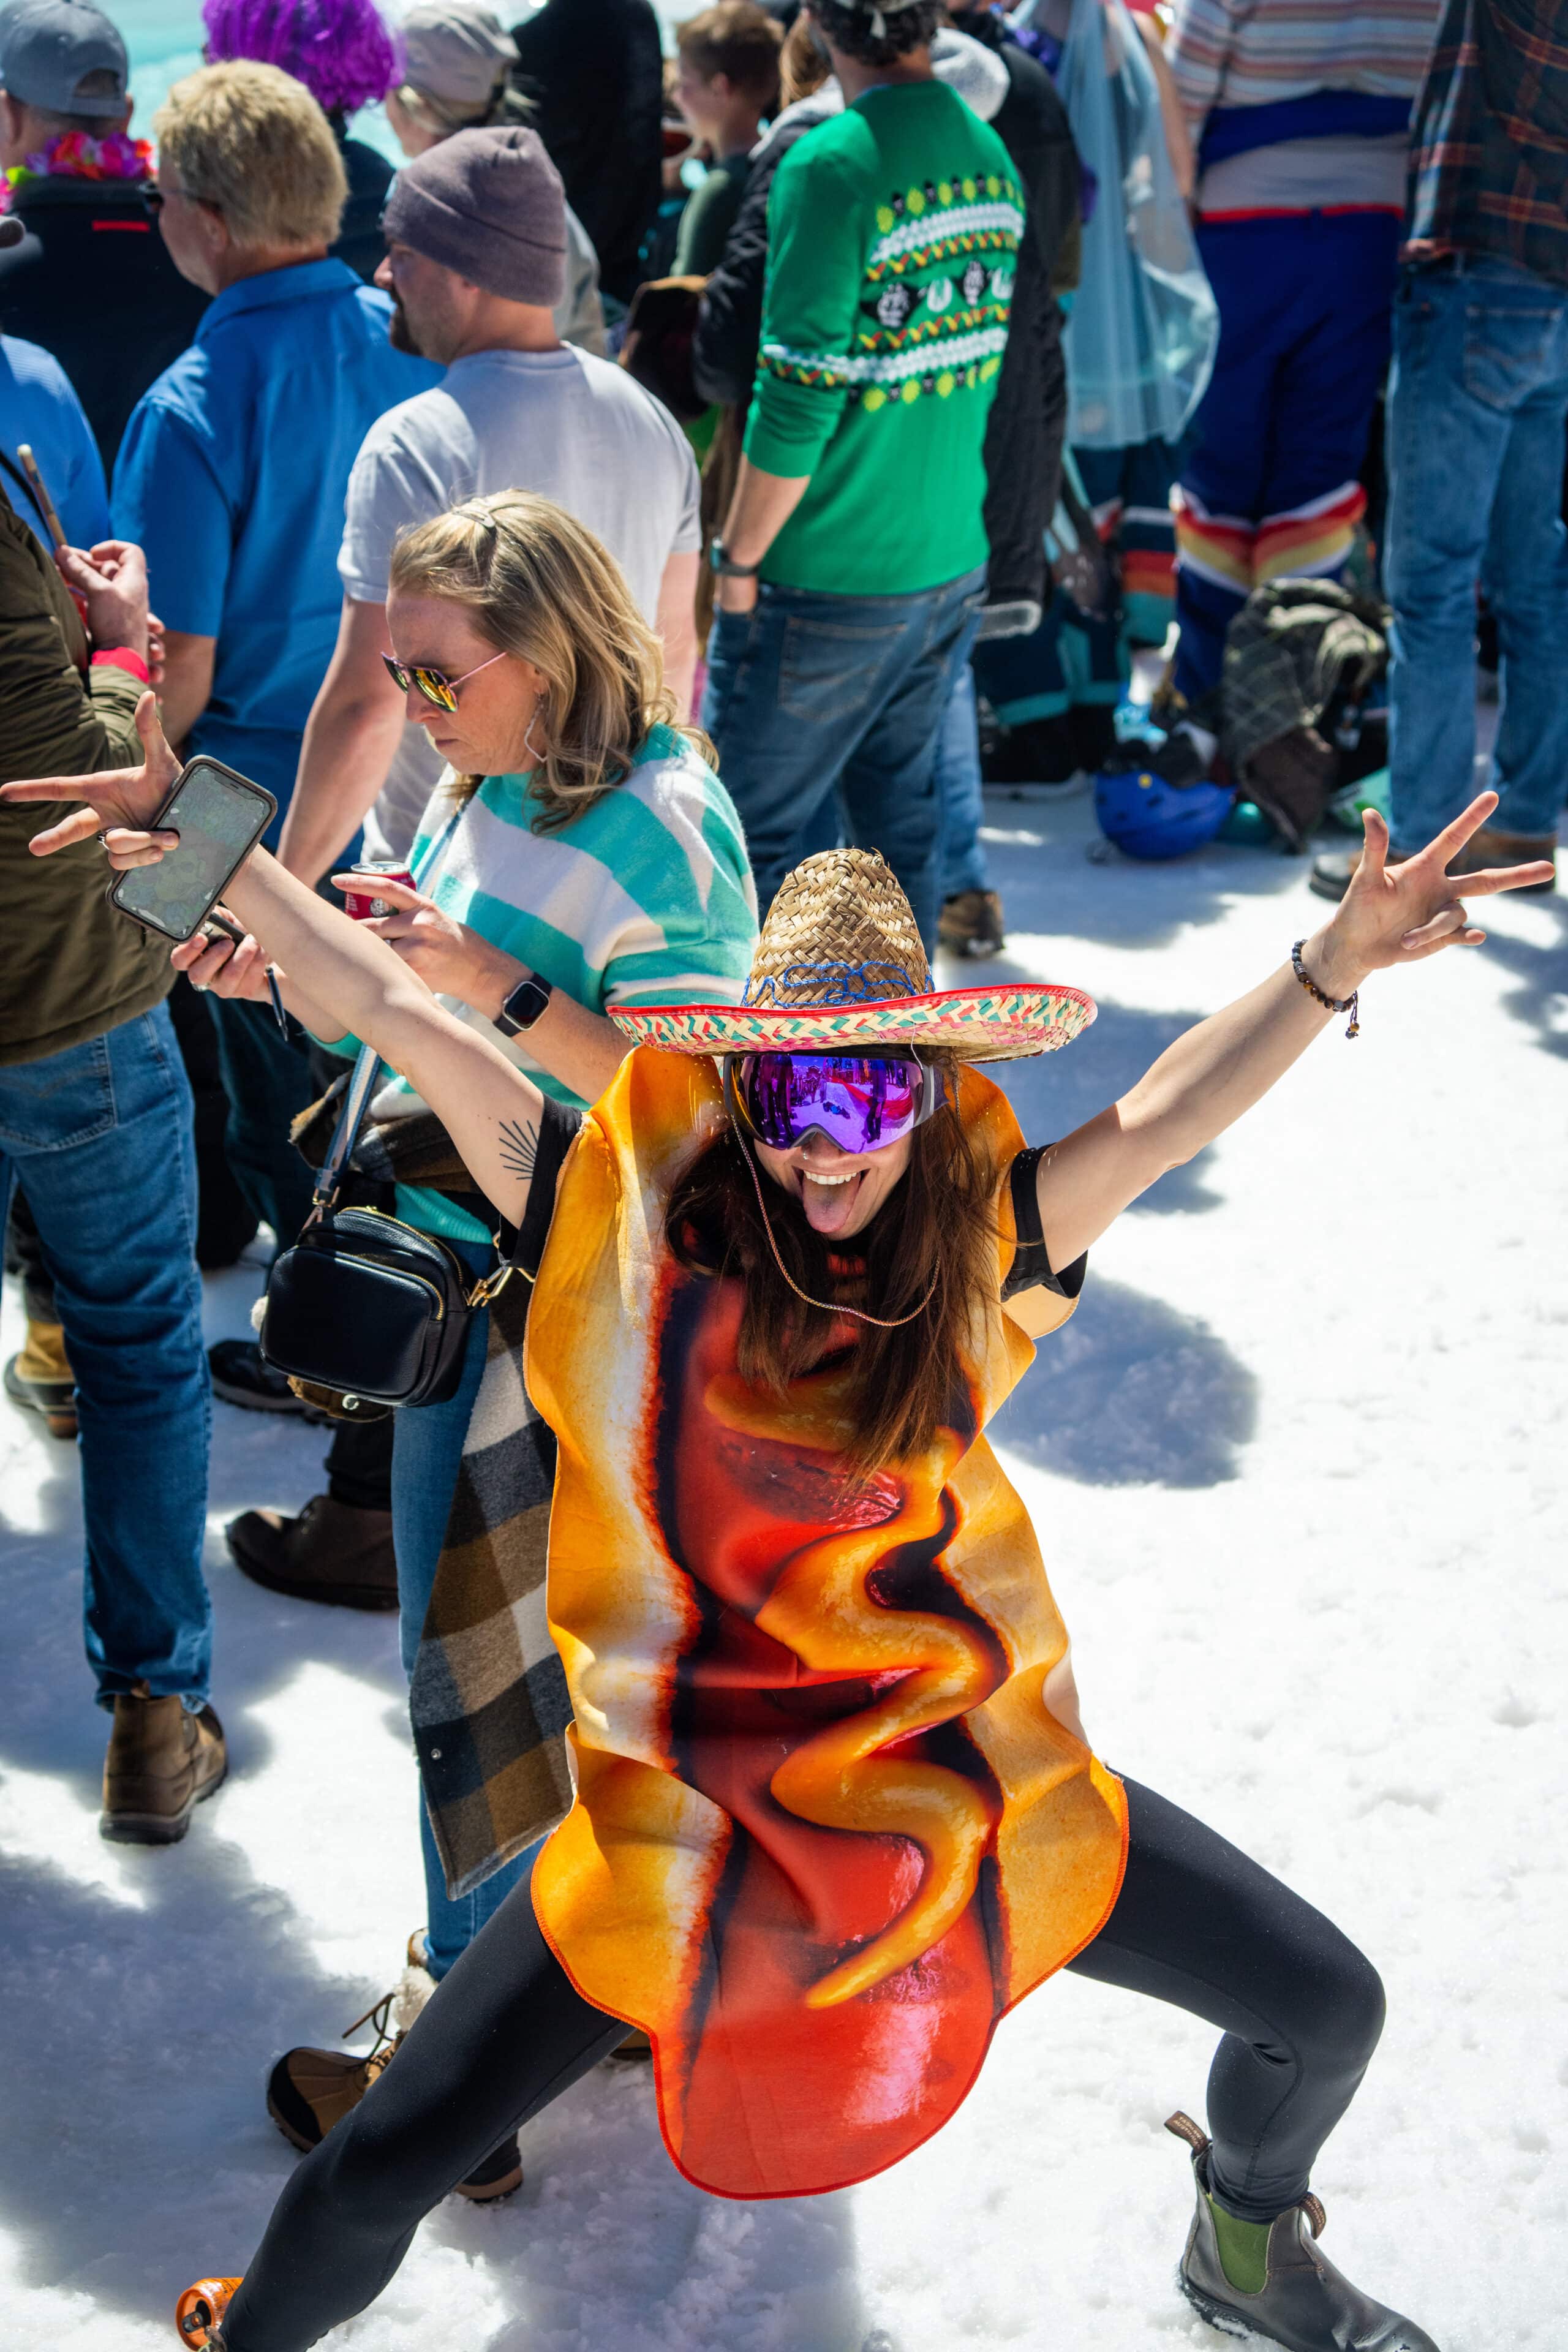 Spectater wearing hot dog costume at Pond Skim